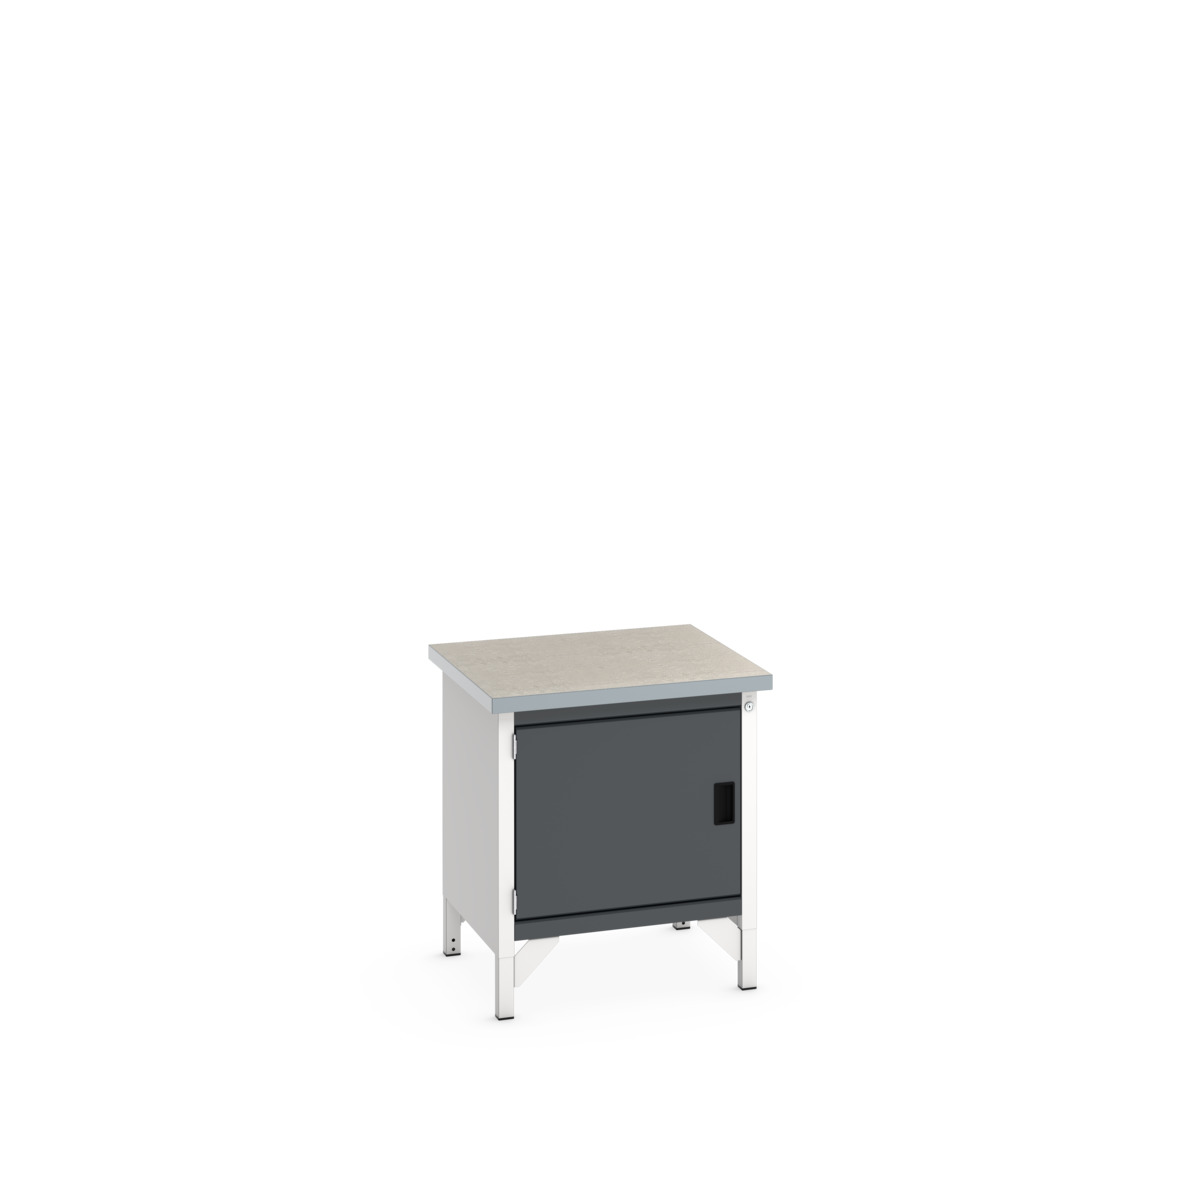 41002006. - cubio storage bench (lino)